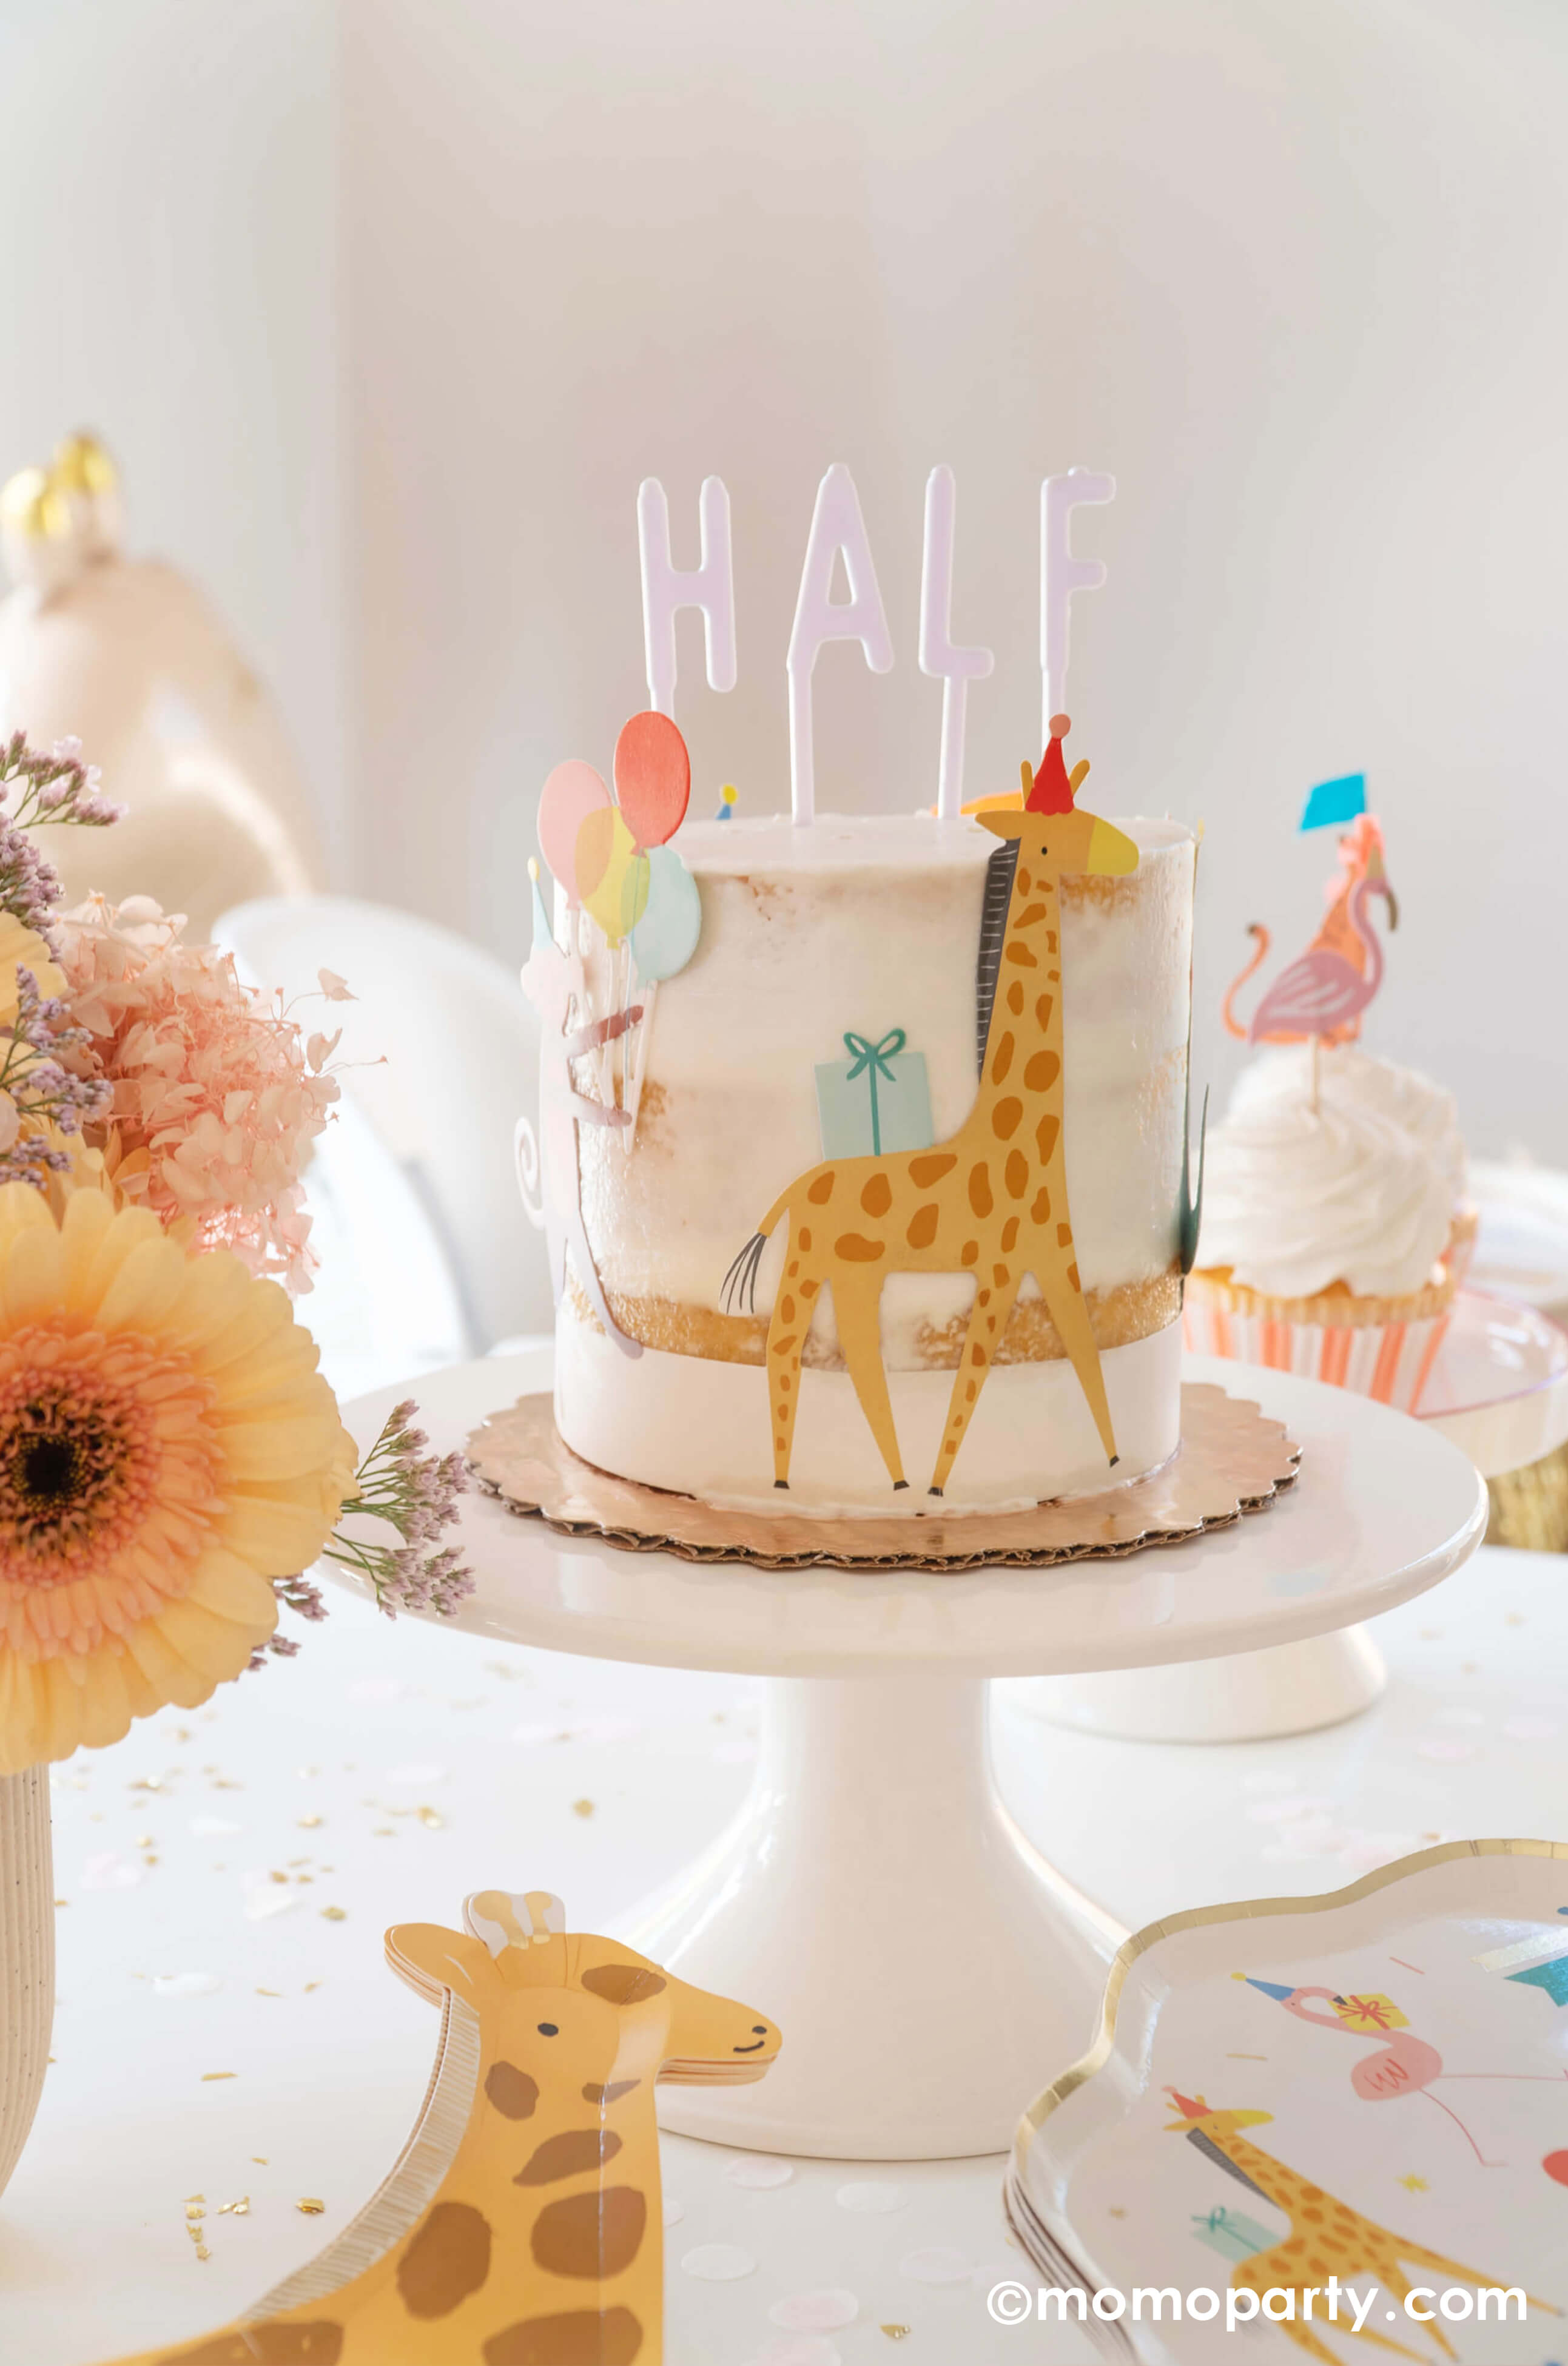 Calling All Party Animals! | Animal birthday cakes, Toddler birthday cakes,  Animal themed birthday party